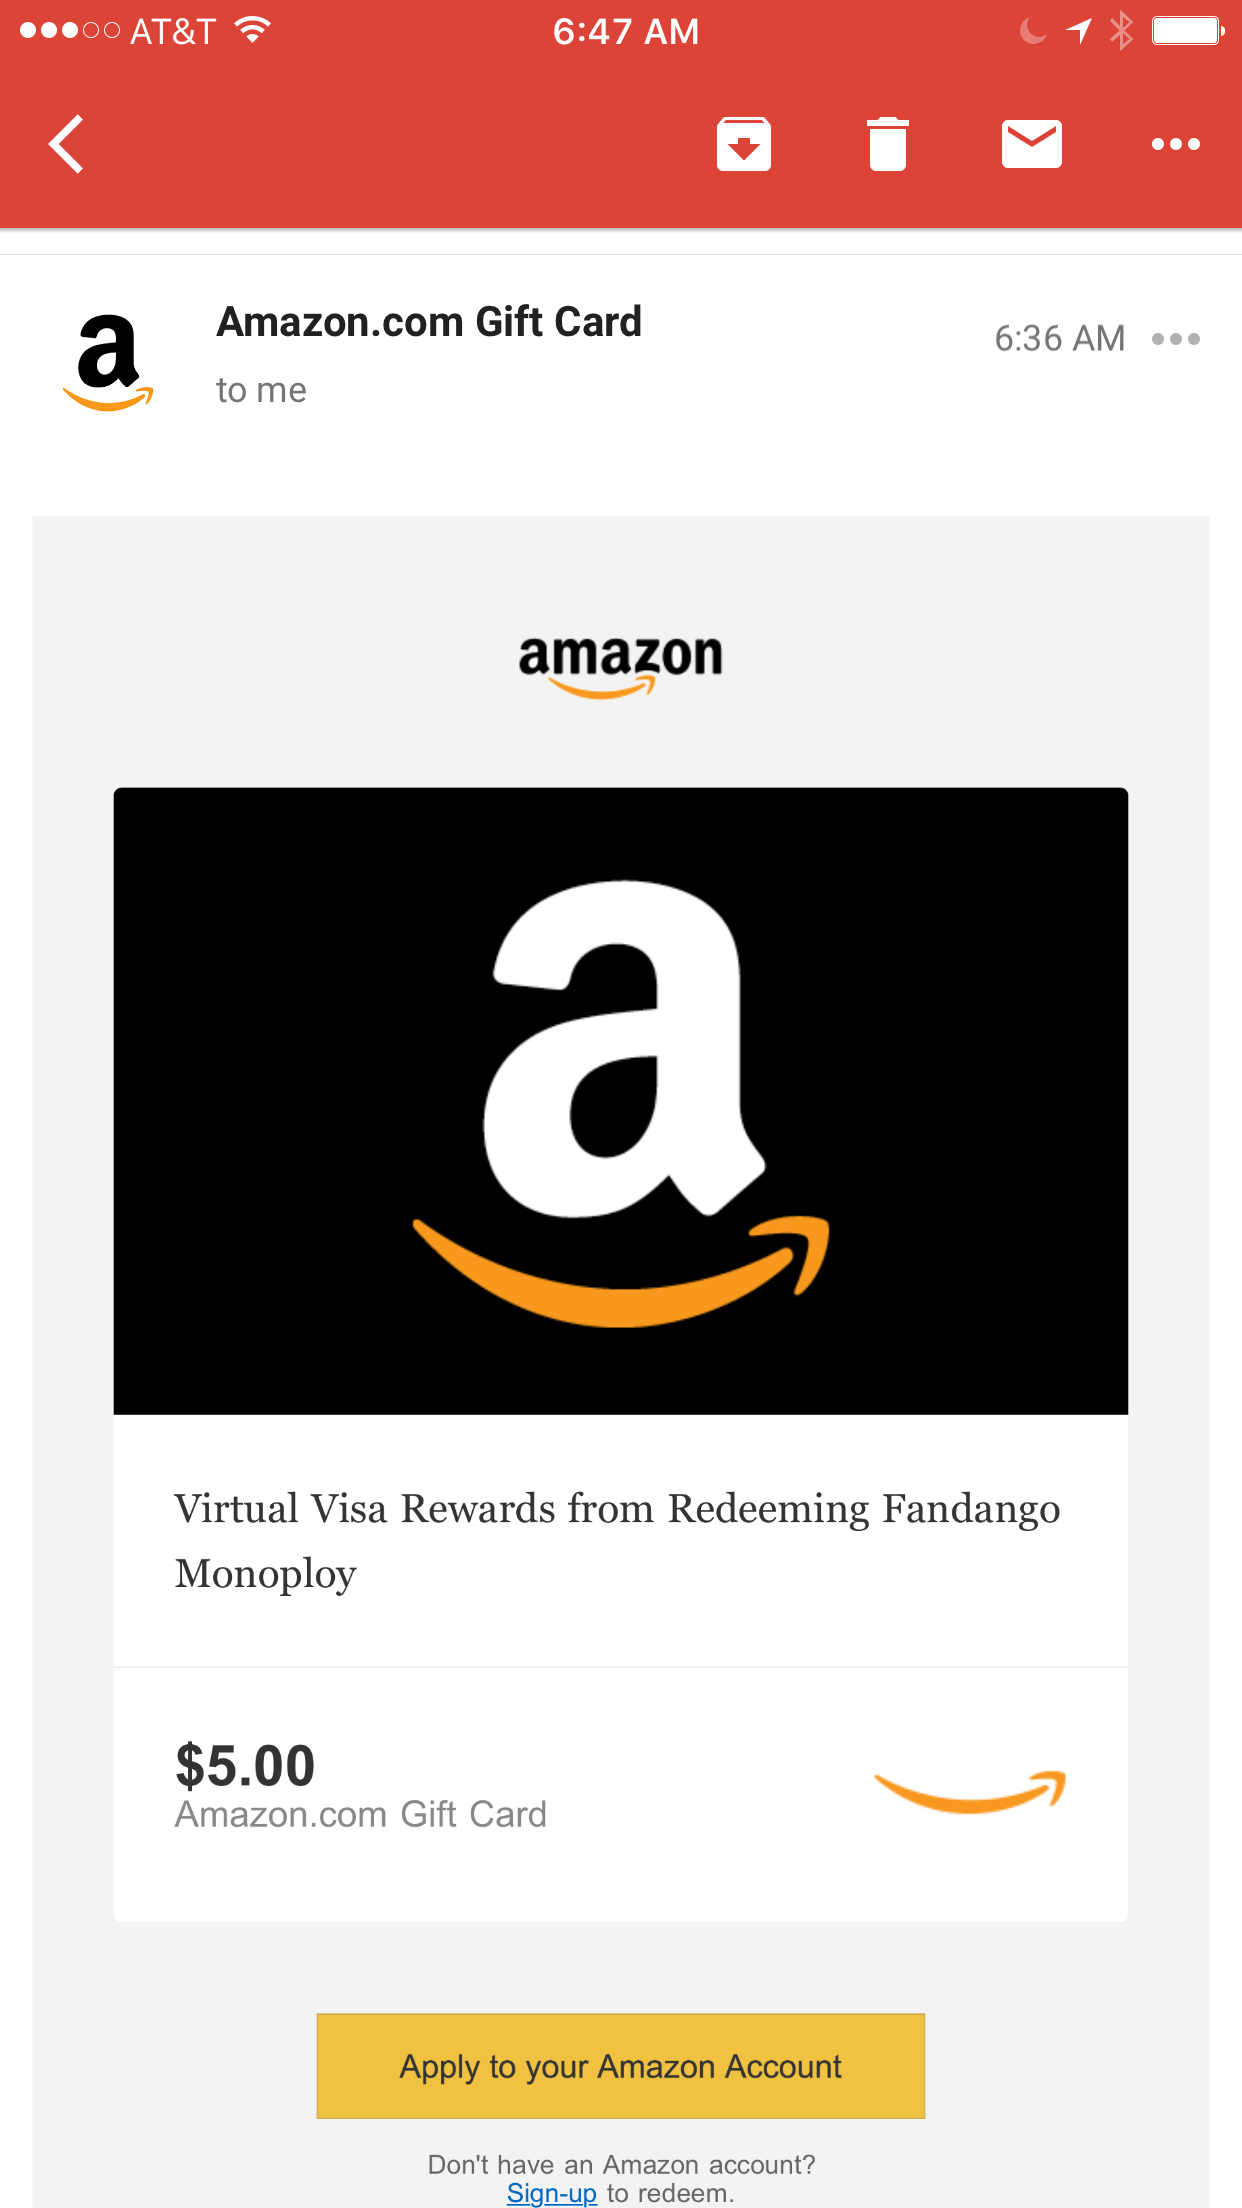 How to Redeem Your Monopoly Fandango Rewards for Amazon